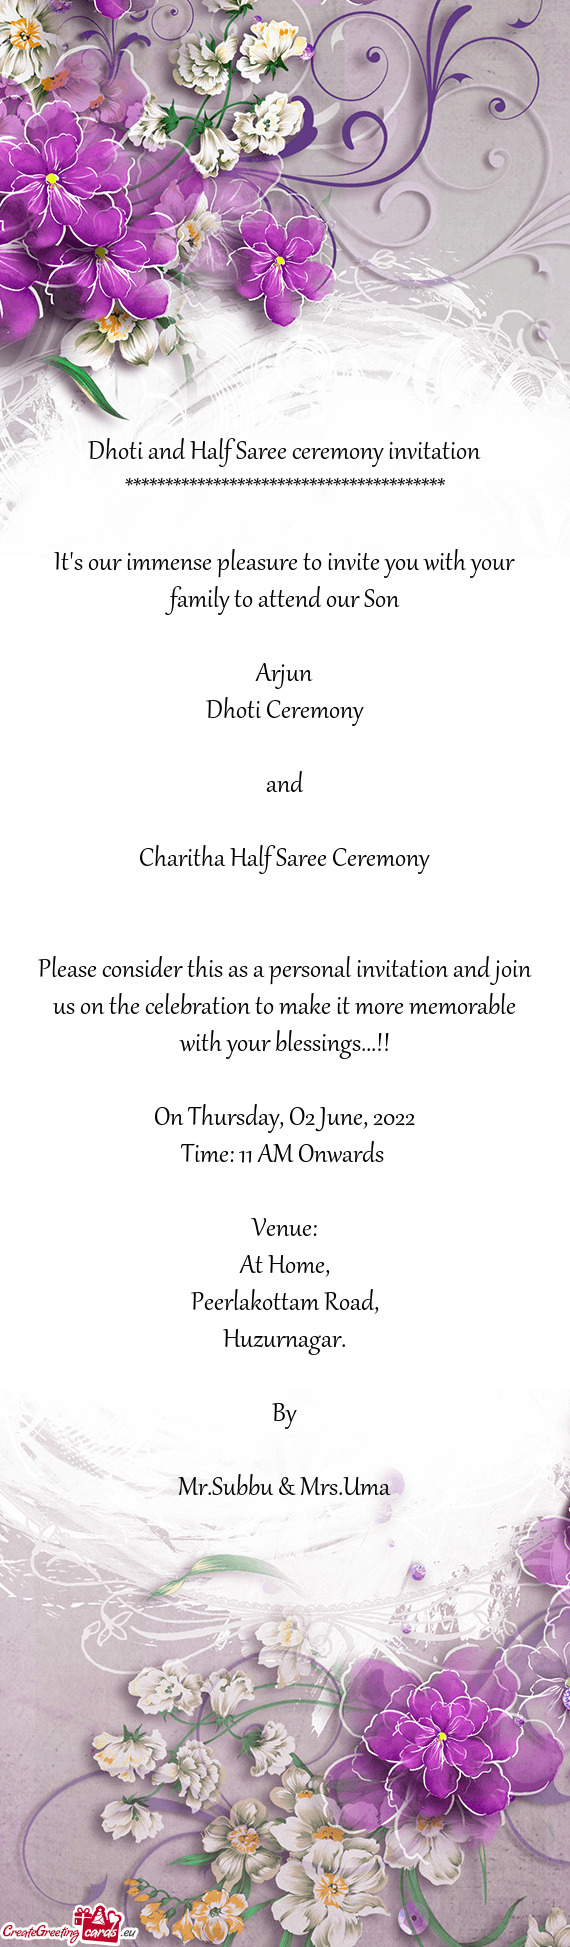 Charitha Half Saree Ceremony